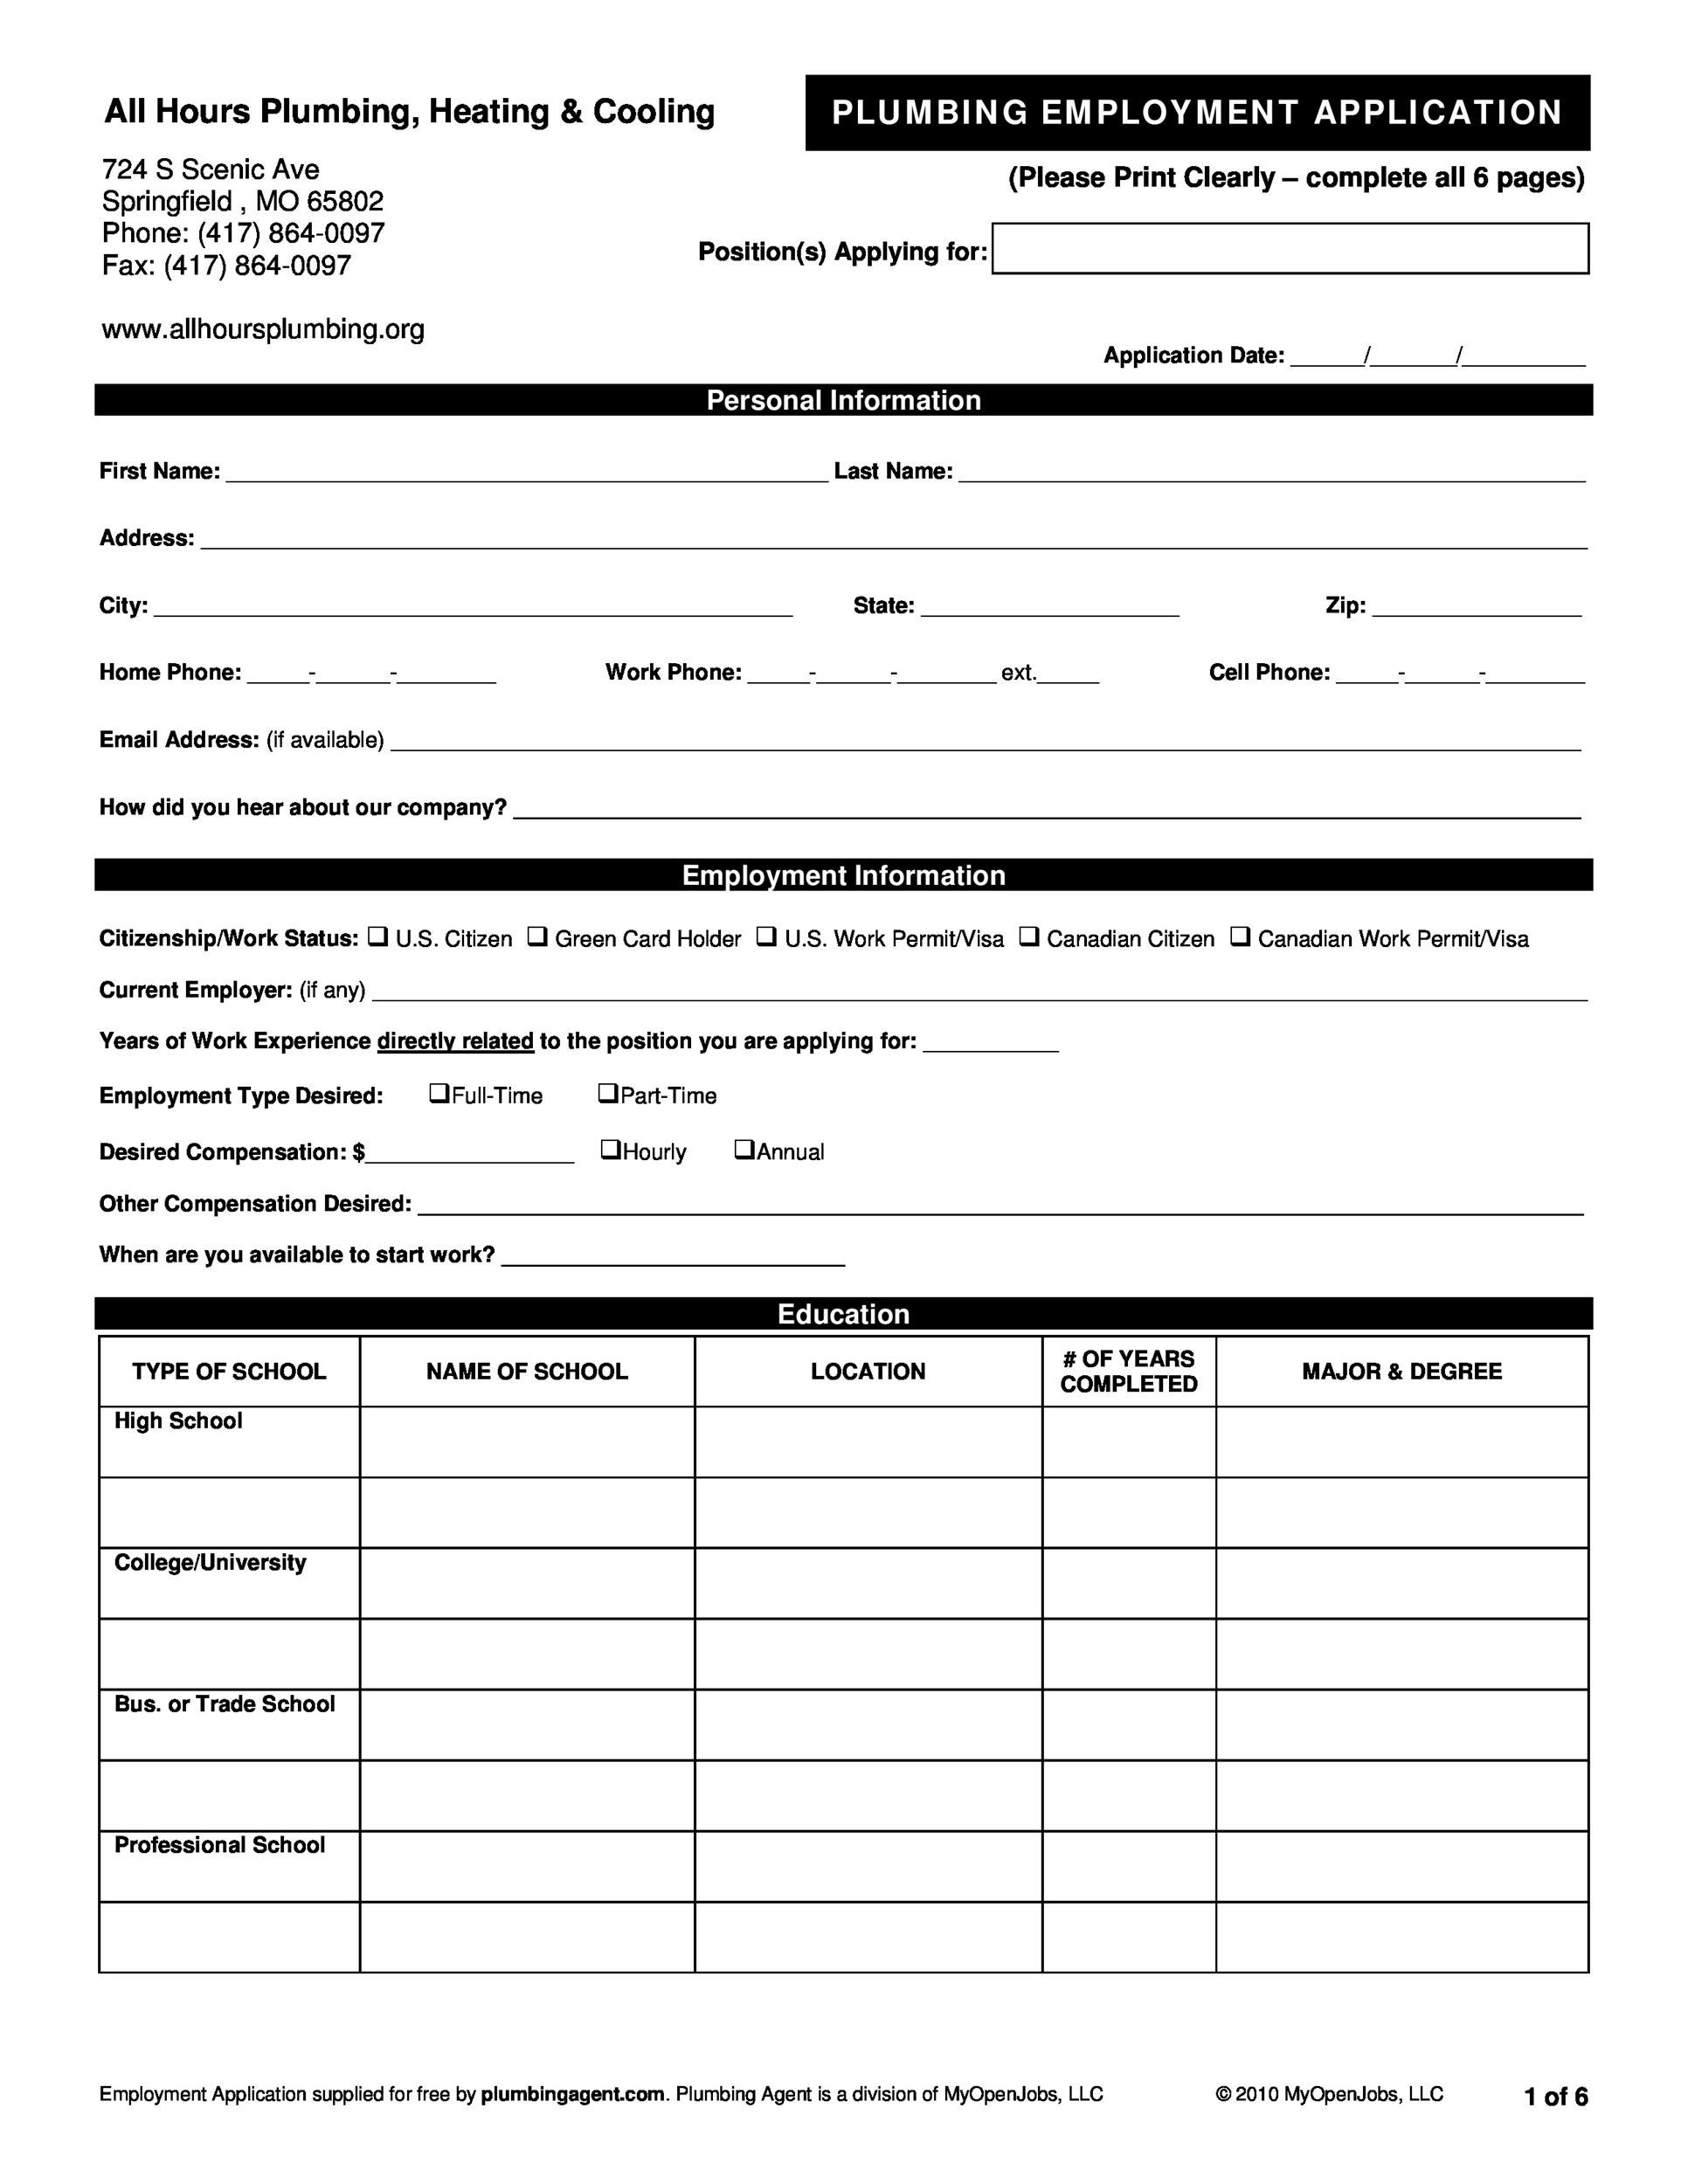 50 Free Employment / Job Application Form Templates [Printable] ᐅ